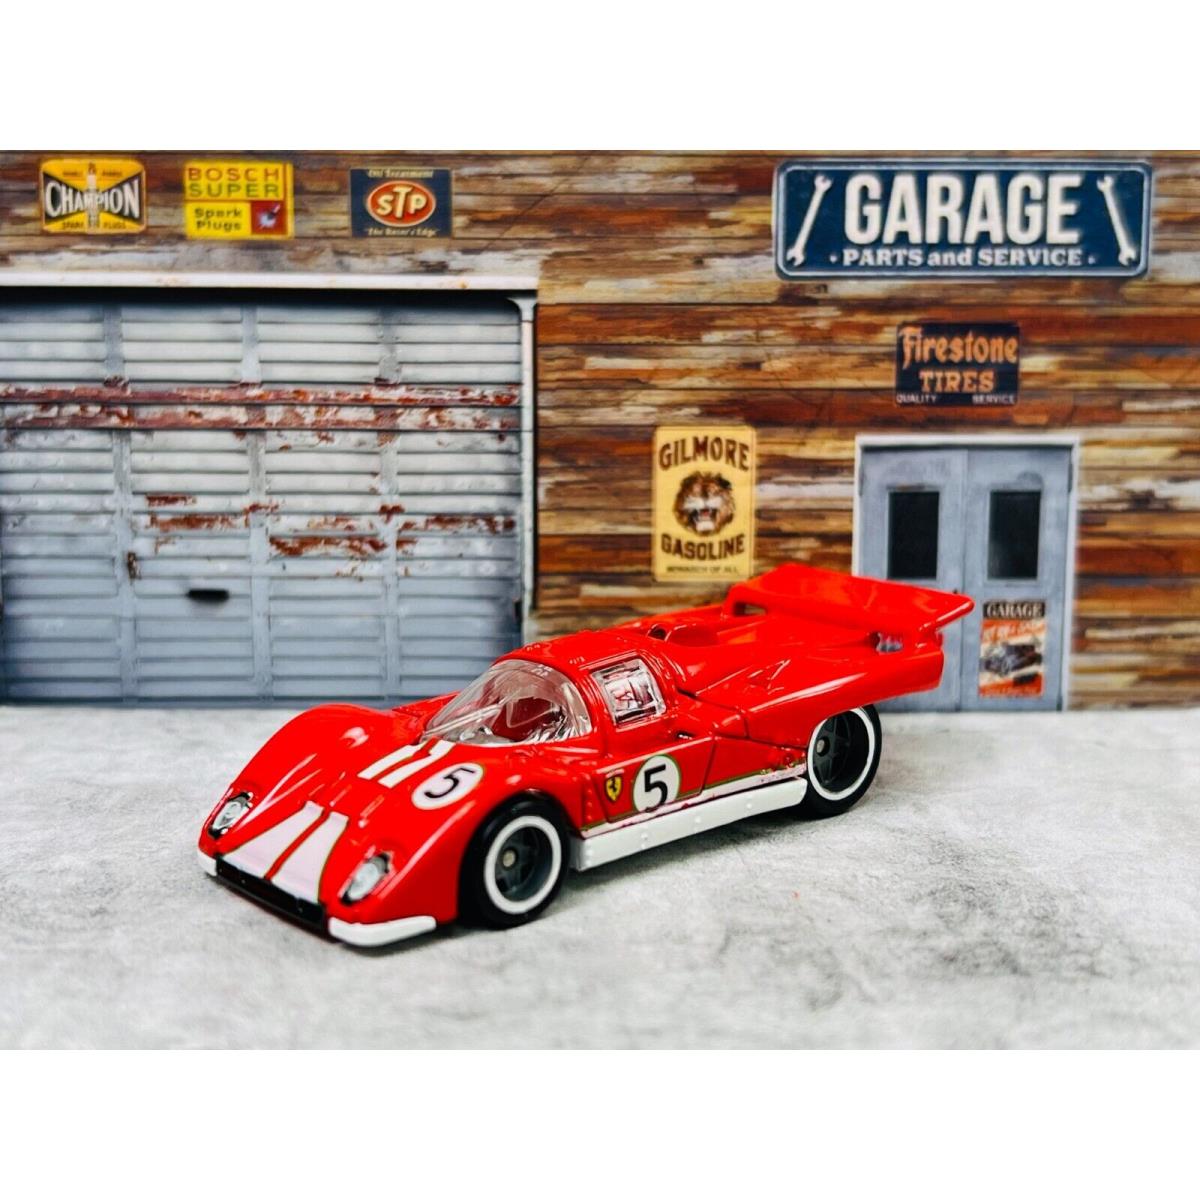 Hot Wheels Garage Ferrari 512 M Red Real Riders C5